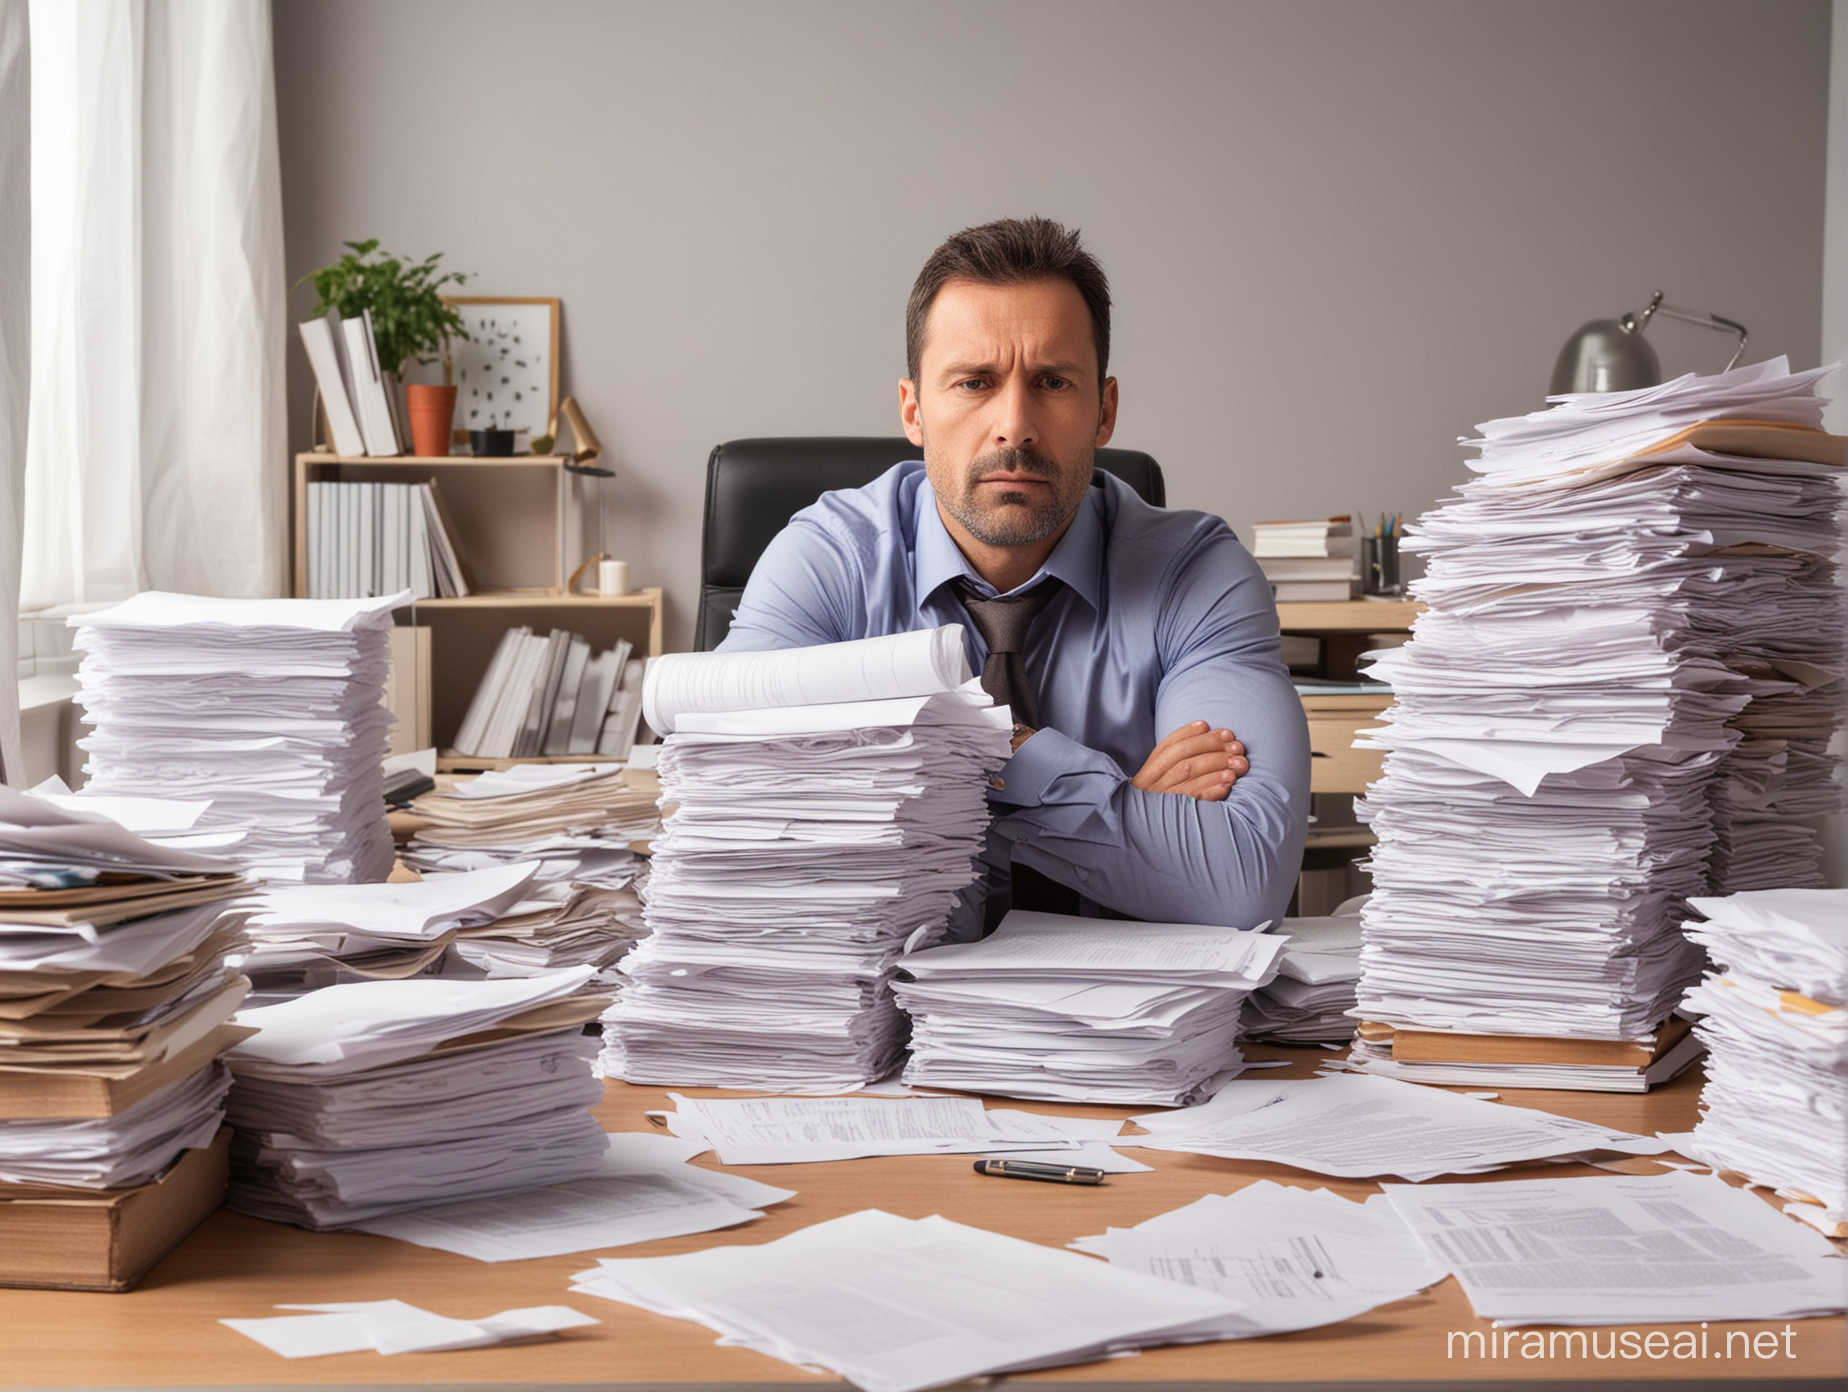 Middleaged Businessman Overwhelmed by Desk Work